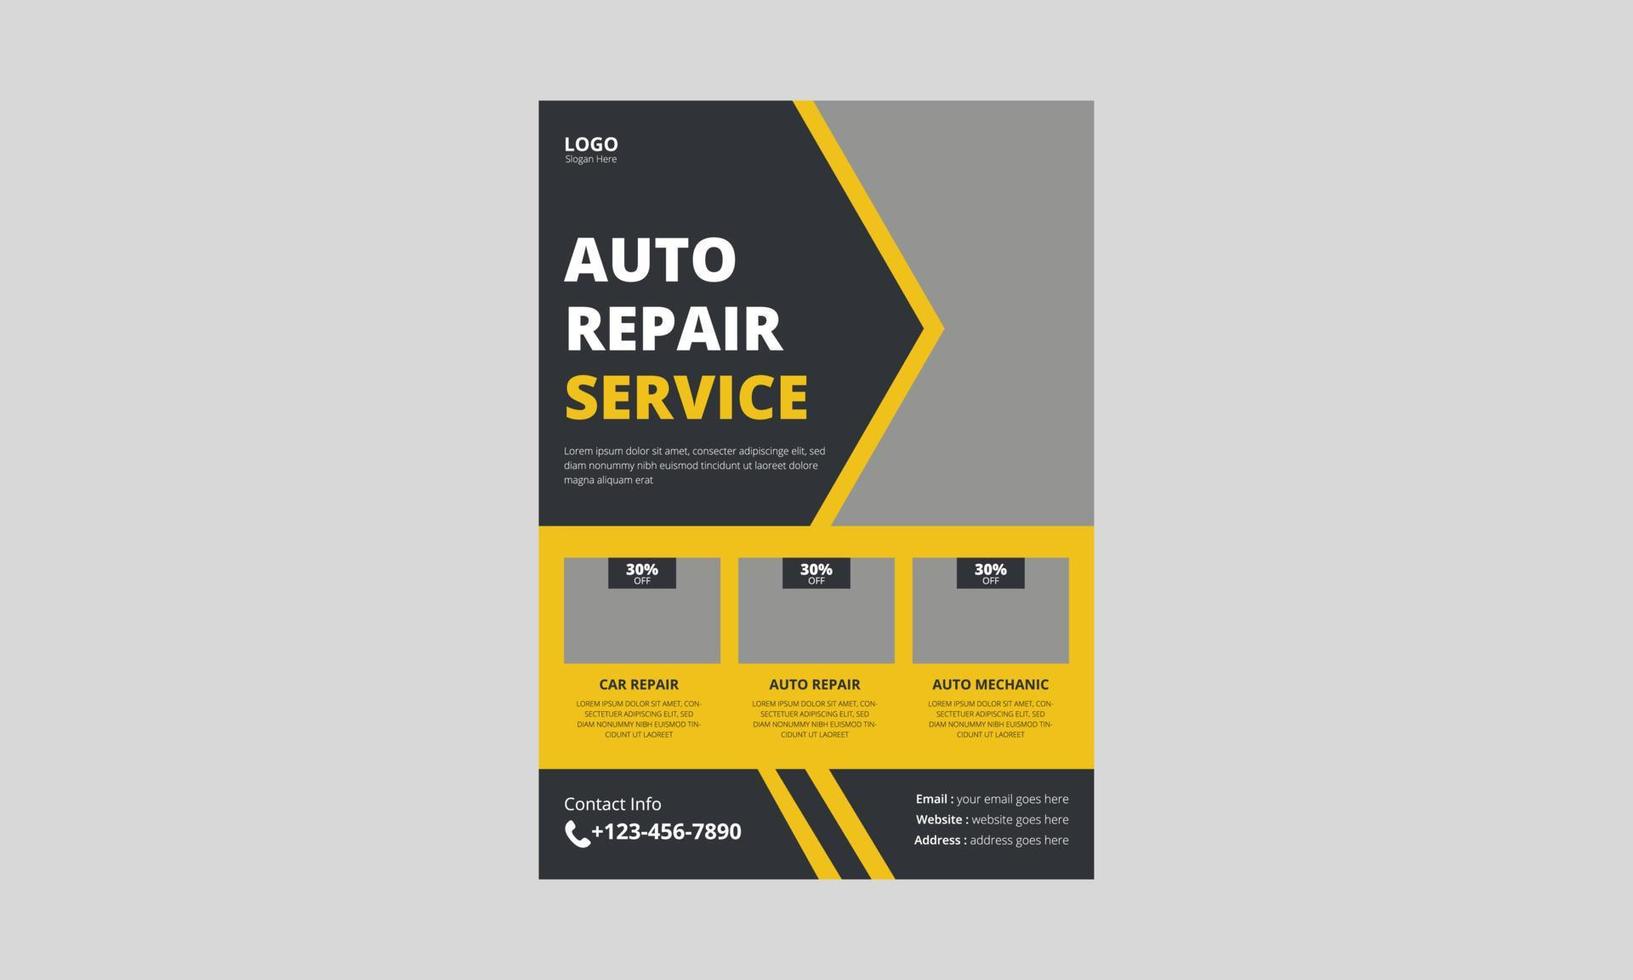 Auto Repair Flyer Template, Automobile Service flyer, Car Repair poster leaflet design, A4 size, cover, flyer, print-ready vector